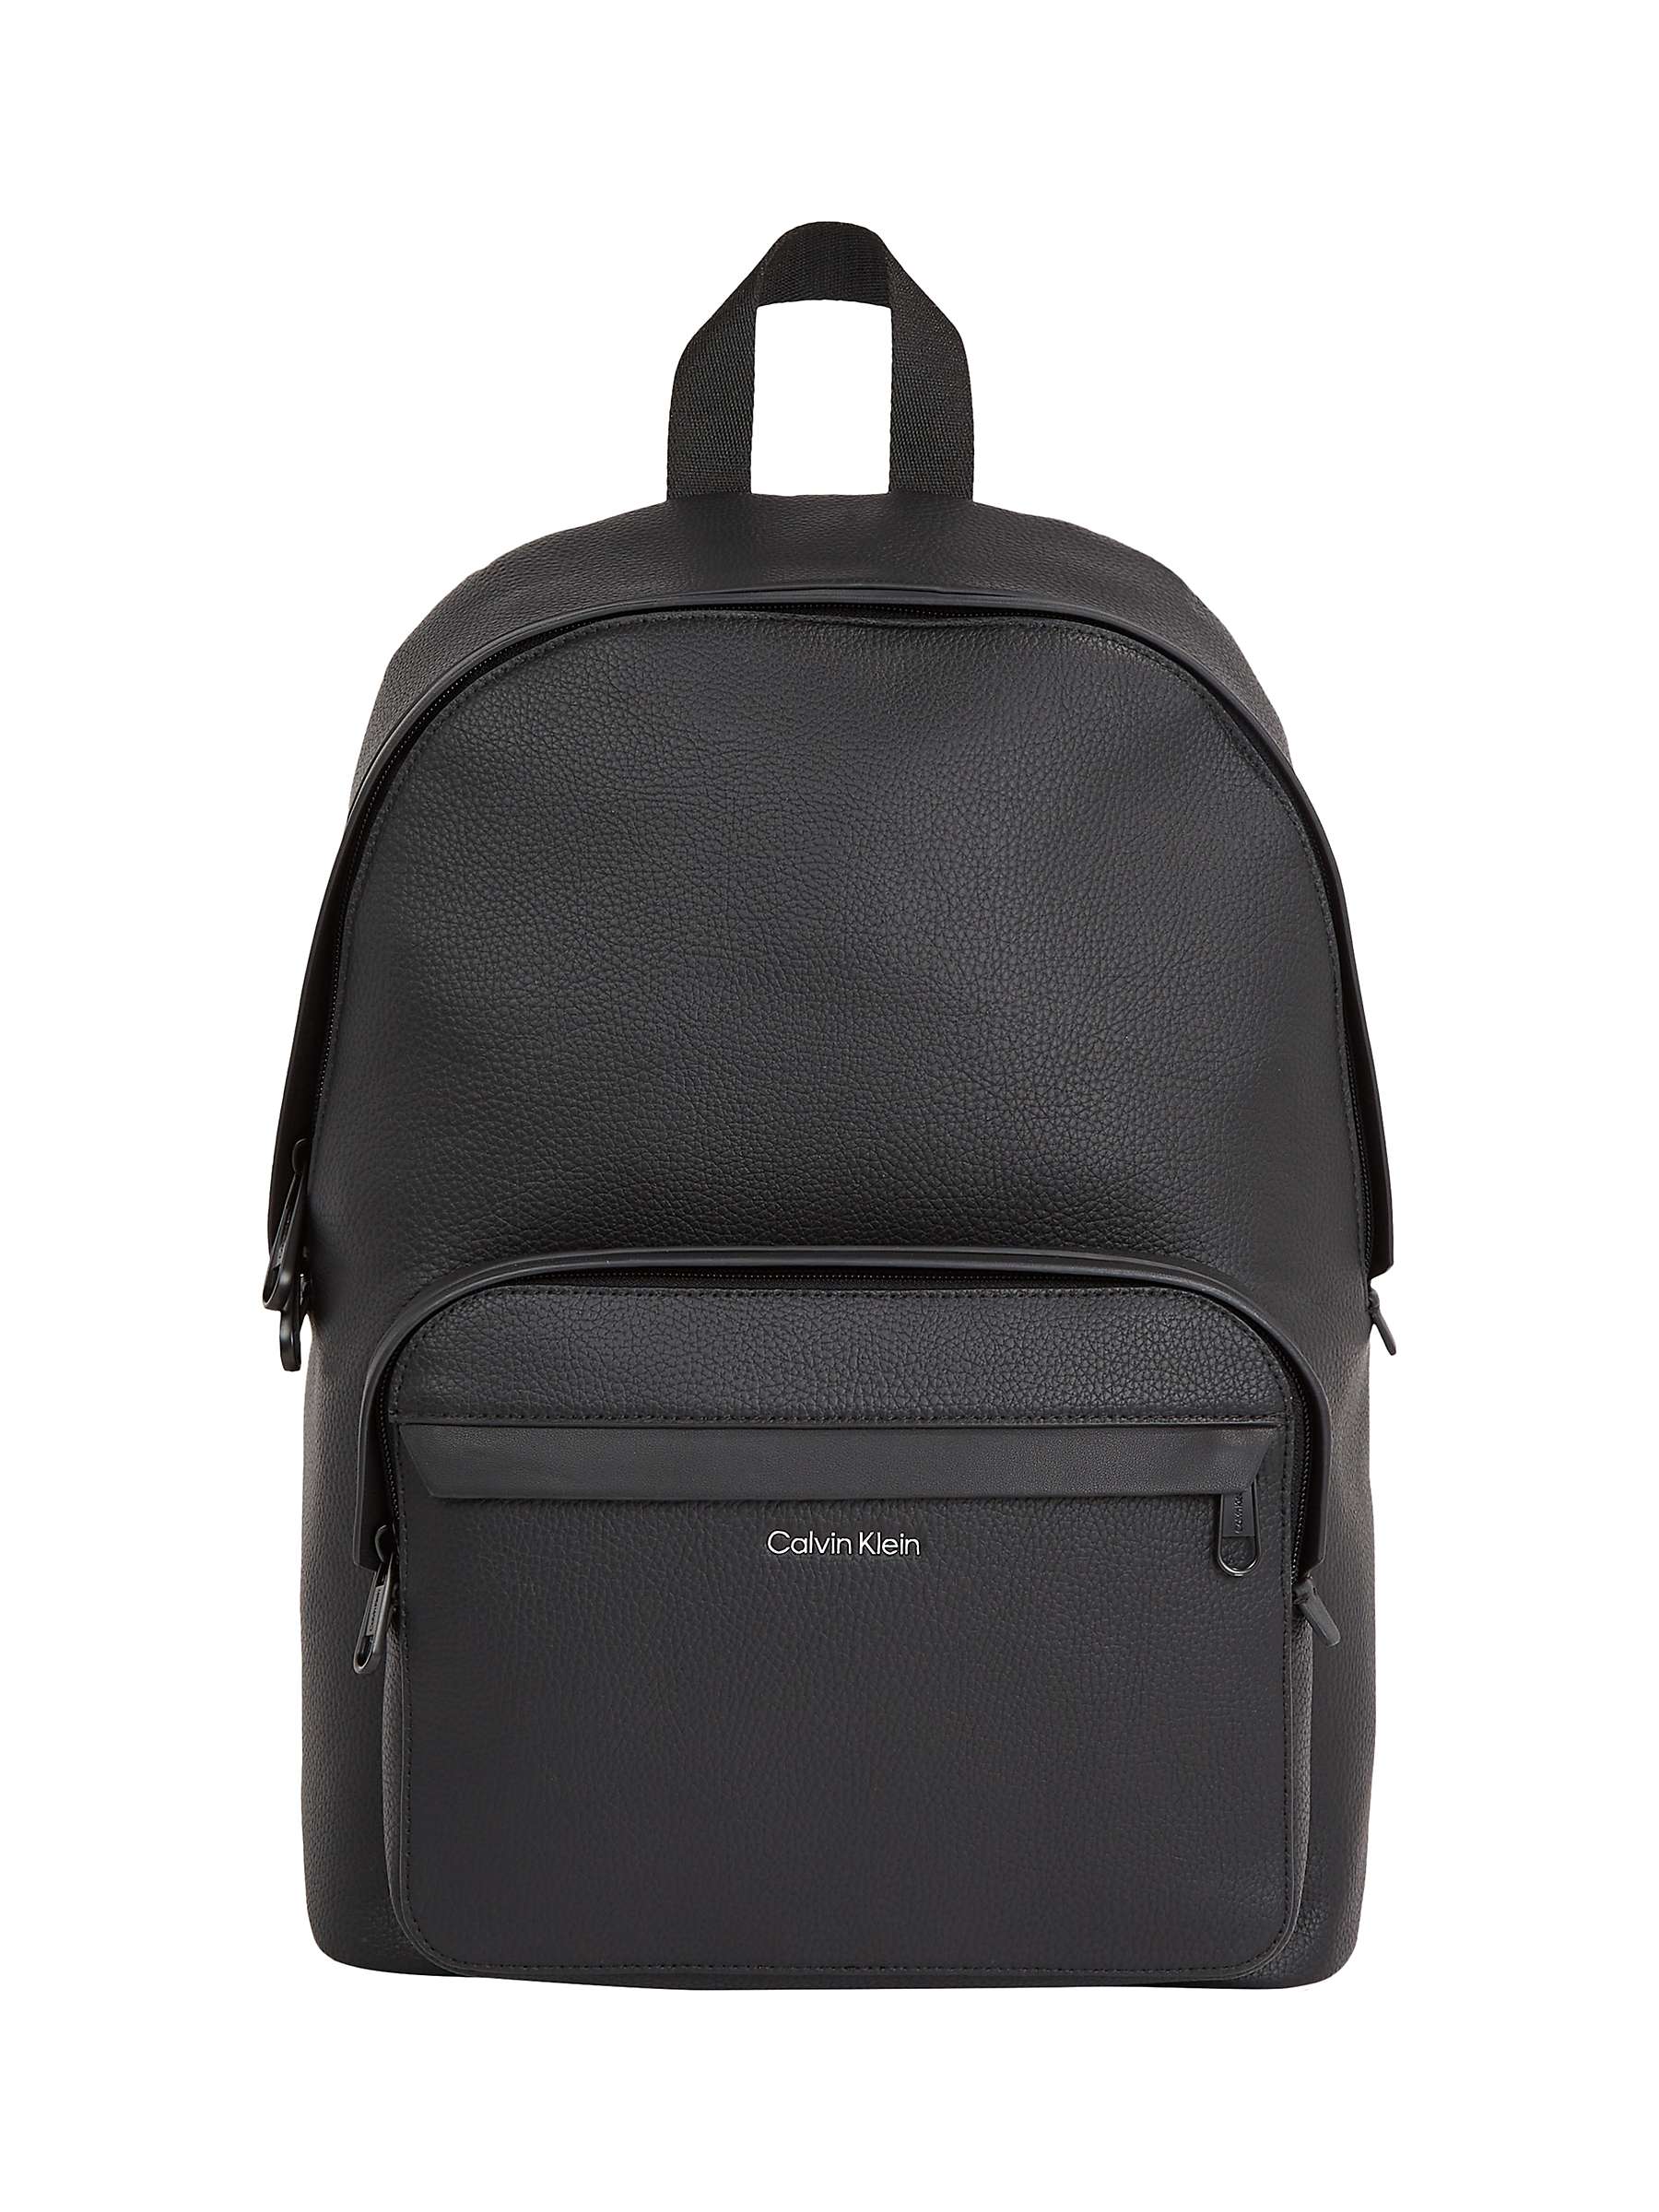 Buy Calvin Klein Backpack, Black Online at johnlewis.com